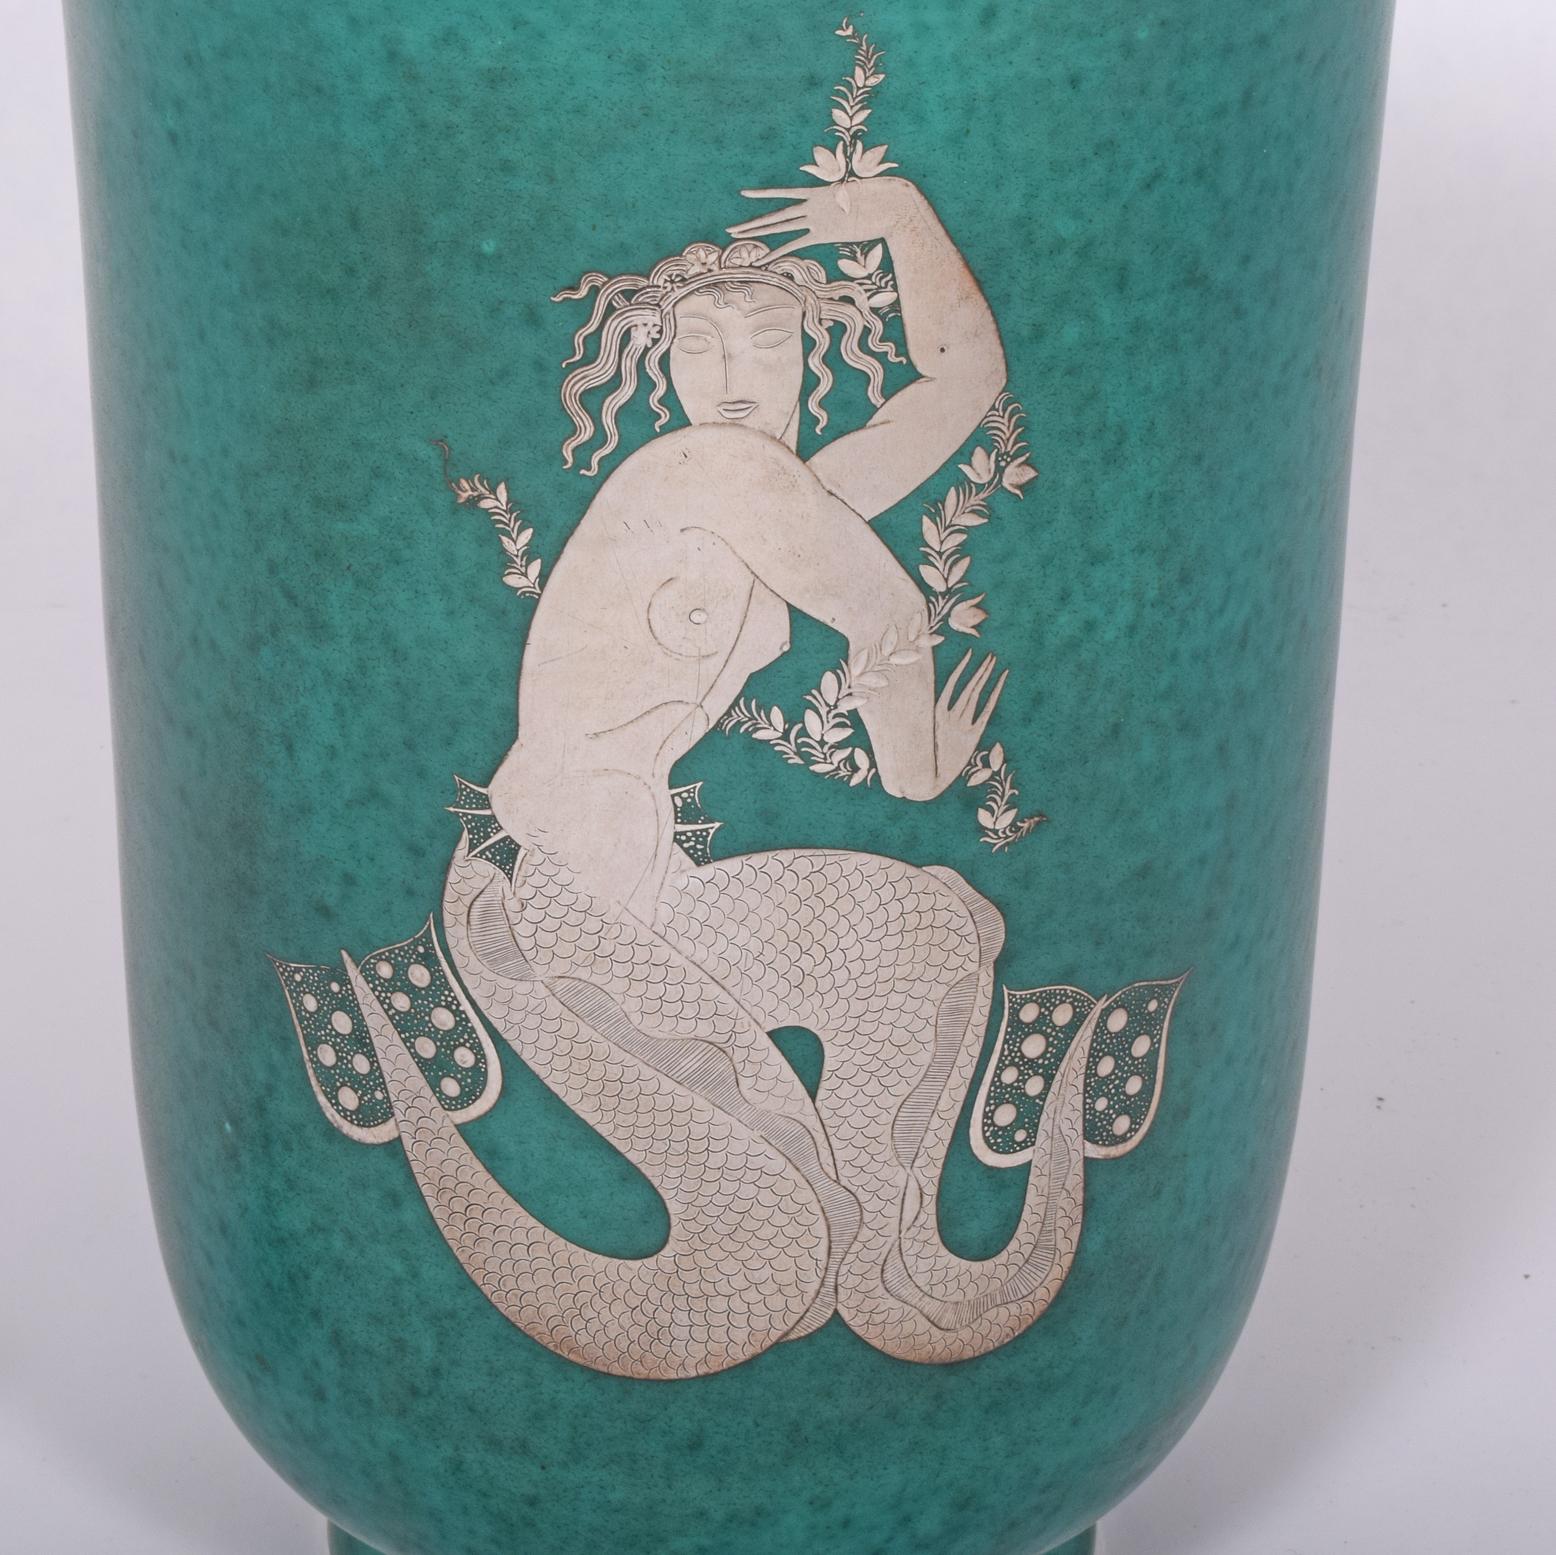 Large Argenta vase with mermaid, Sweden, 1944; Glazed stoneware, silver inlay; Manufacturer stamp/HANDDREJAD, inlaid signature GUSTAVSBERG ARGENTA 1178 JOEL OSTERBERG 1944 29/12 FRAN GUSTAVSBERGS FABRIKER with artist cipher; Measures: 13 1/2